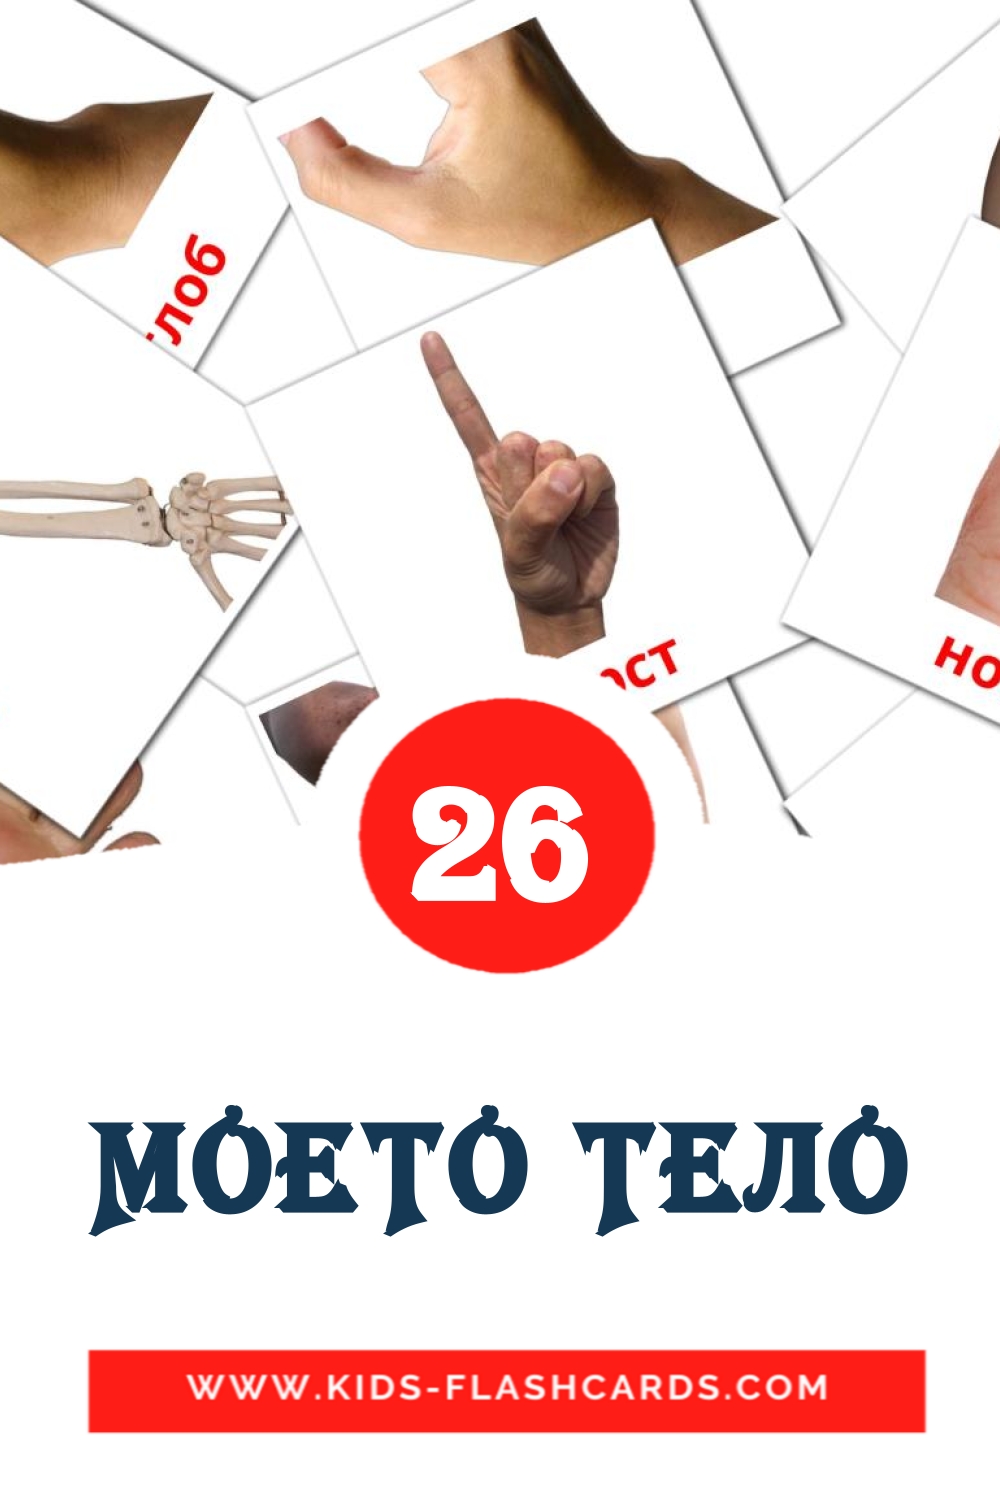 26 carte illustrate di МОЕТО ТЕЛО per la scuola materna in macedone